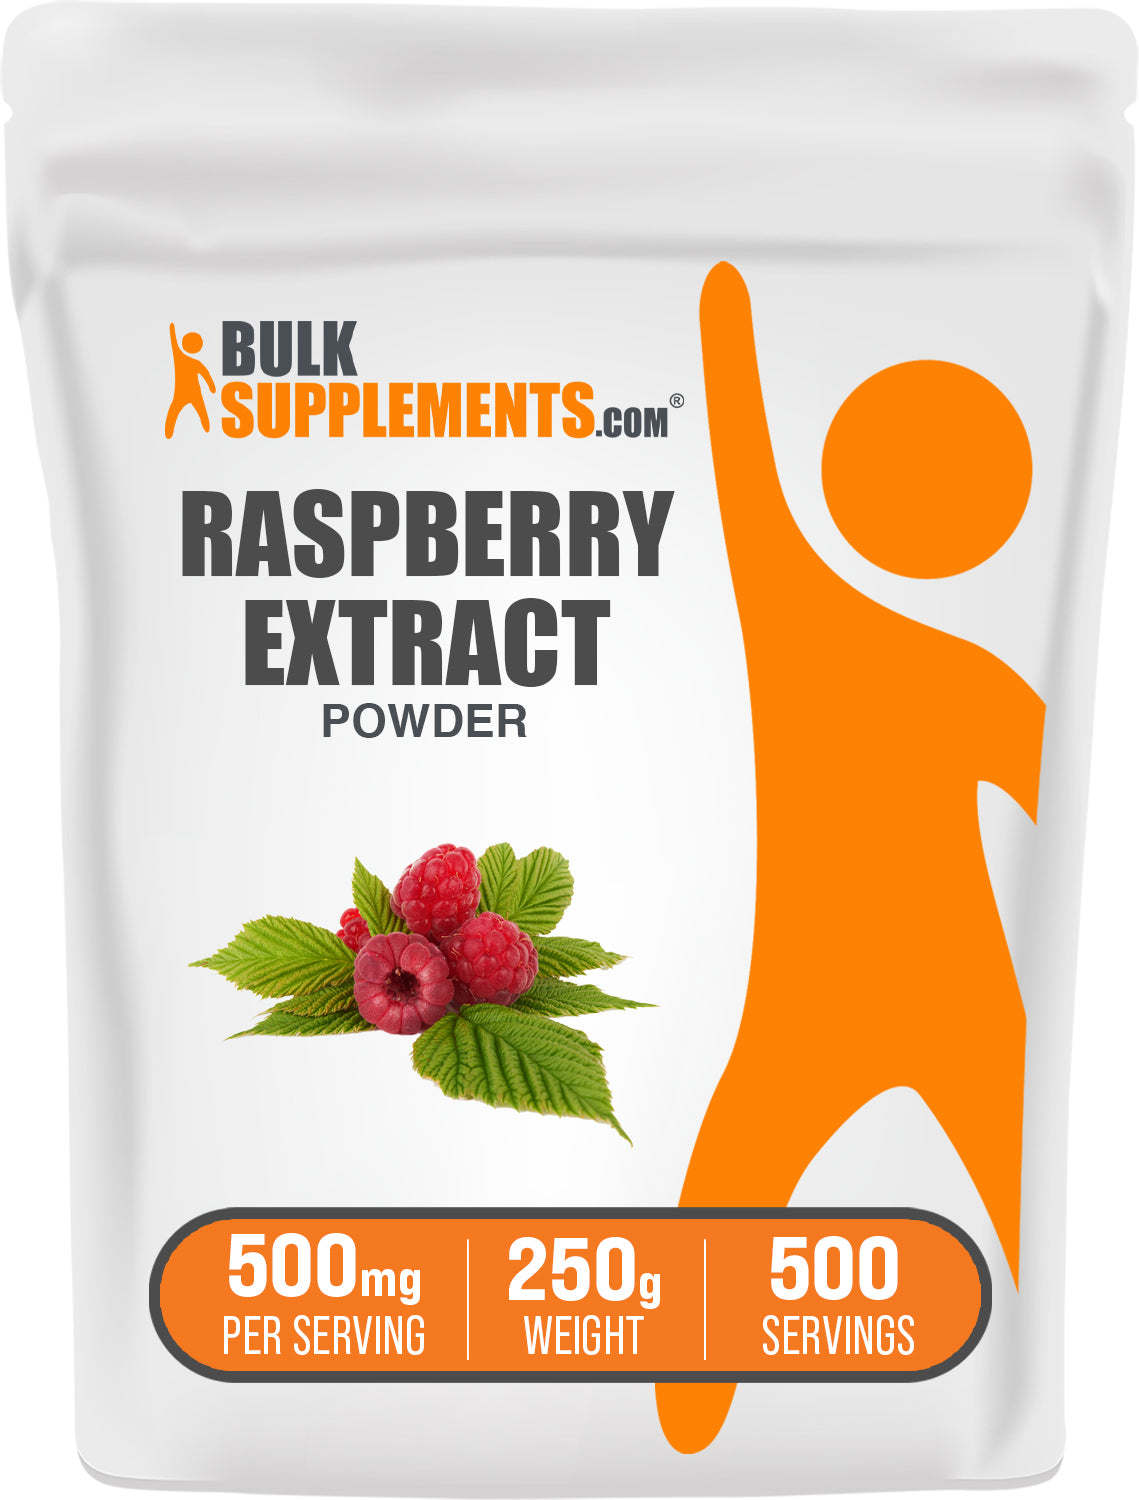 Raspberry Extract Powder 250g bag